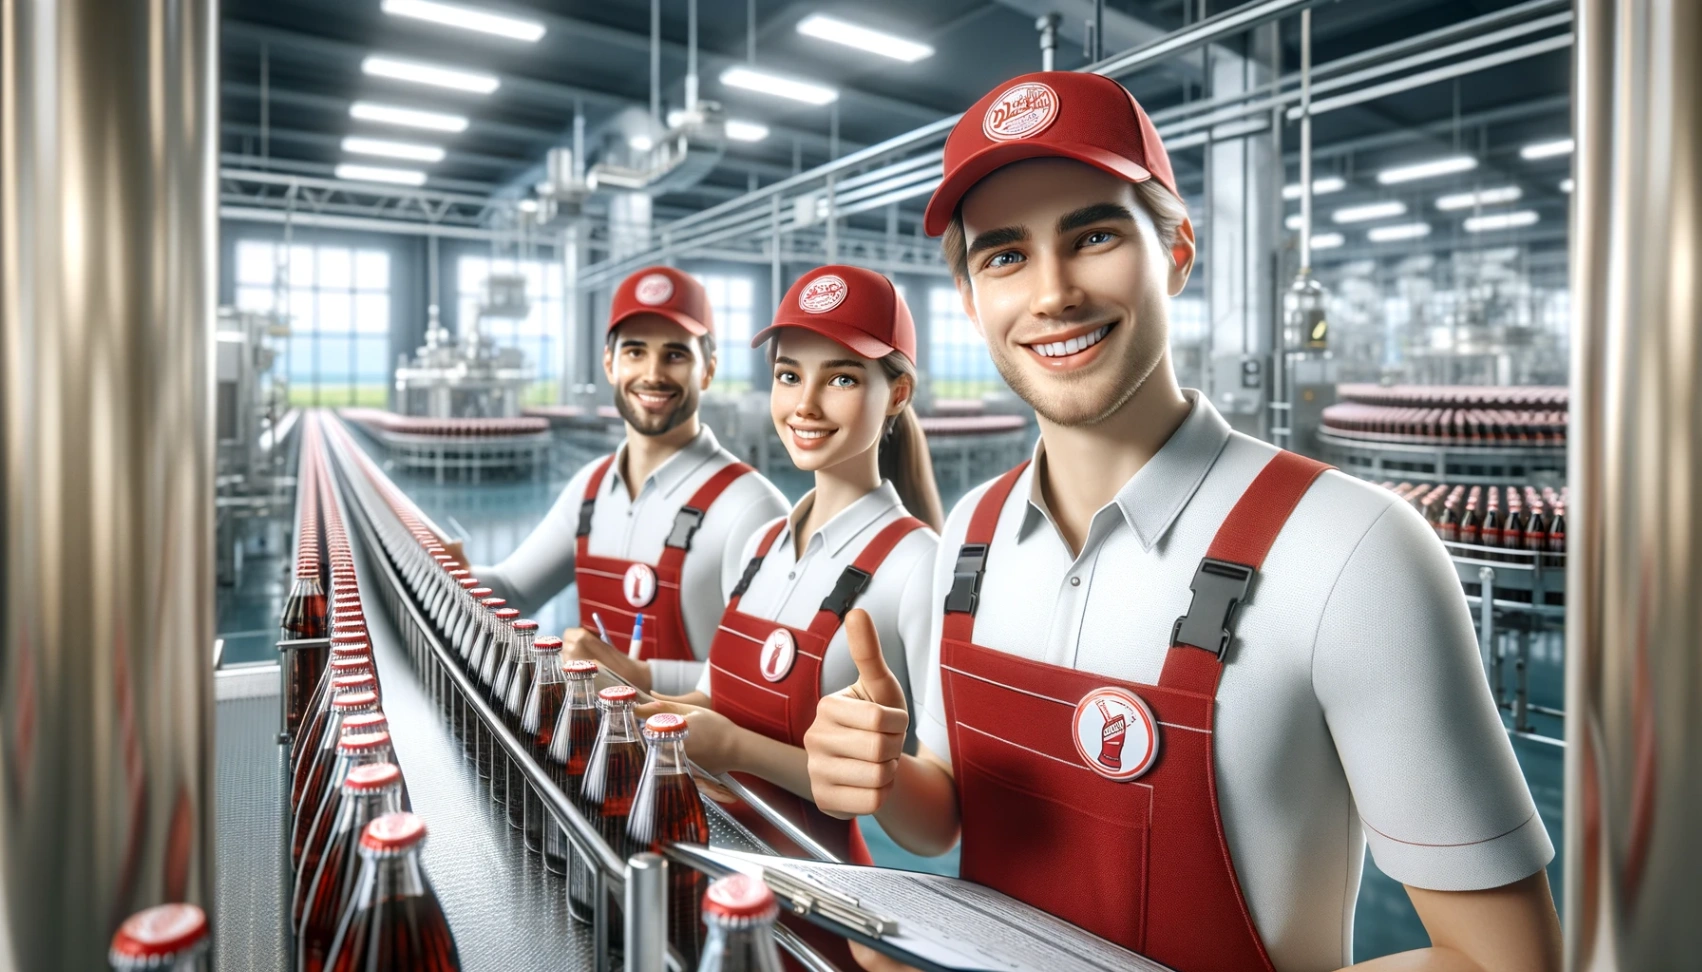 Coca-Cola Job Openings: How to Apply Online